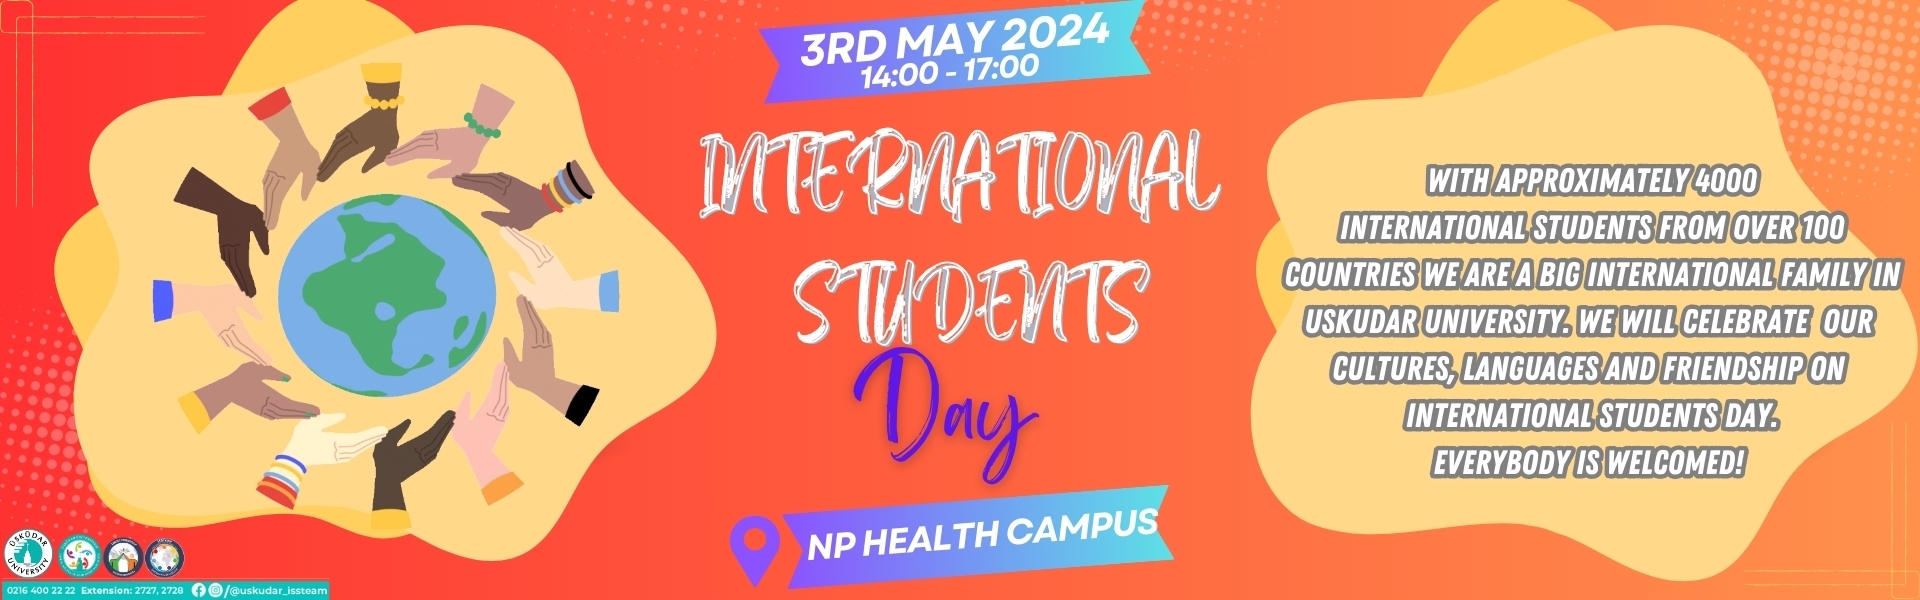 International student day